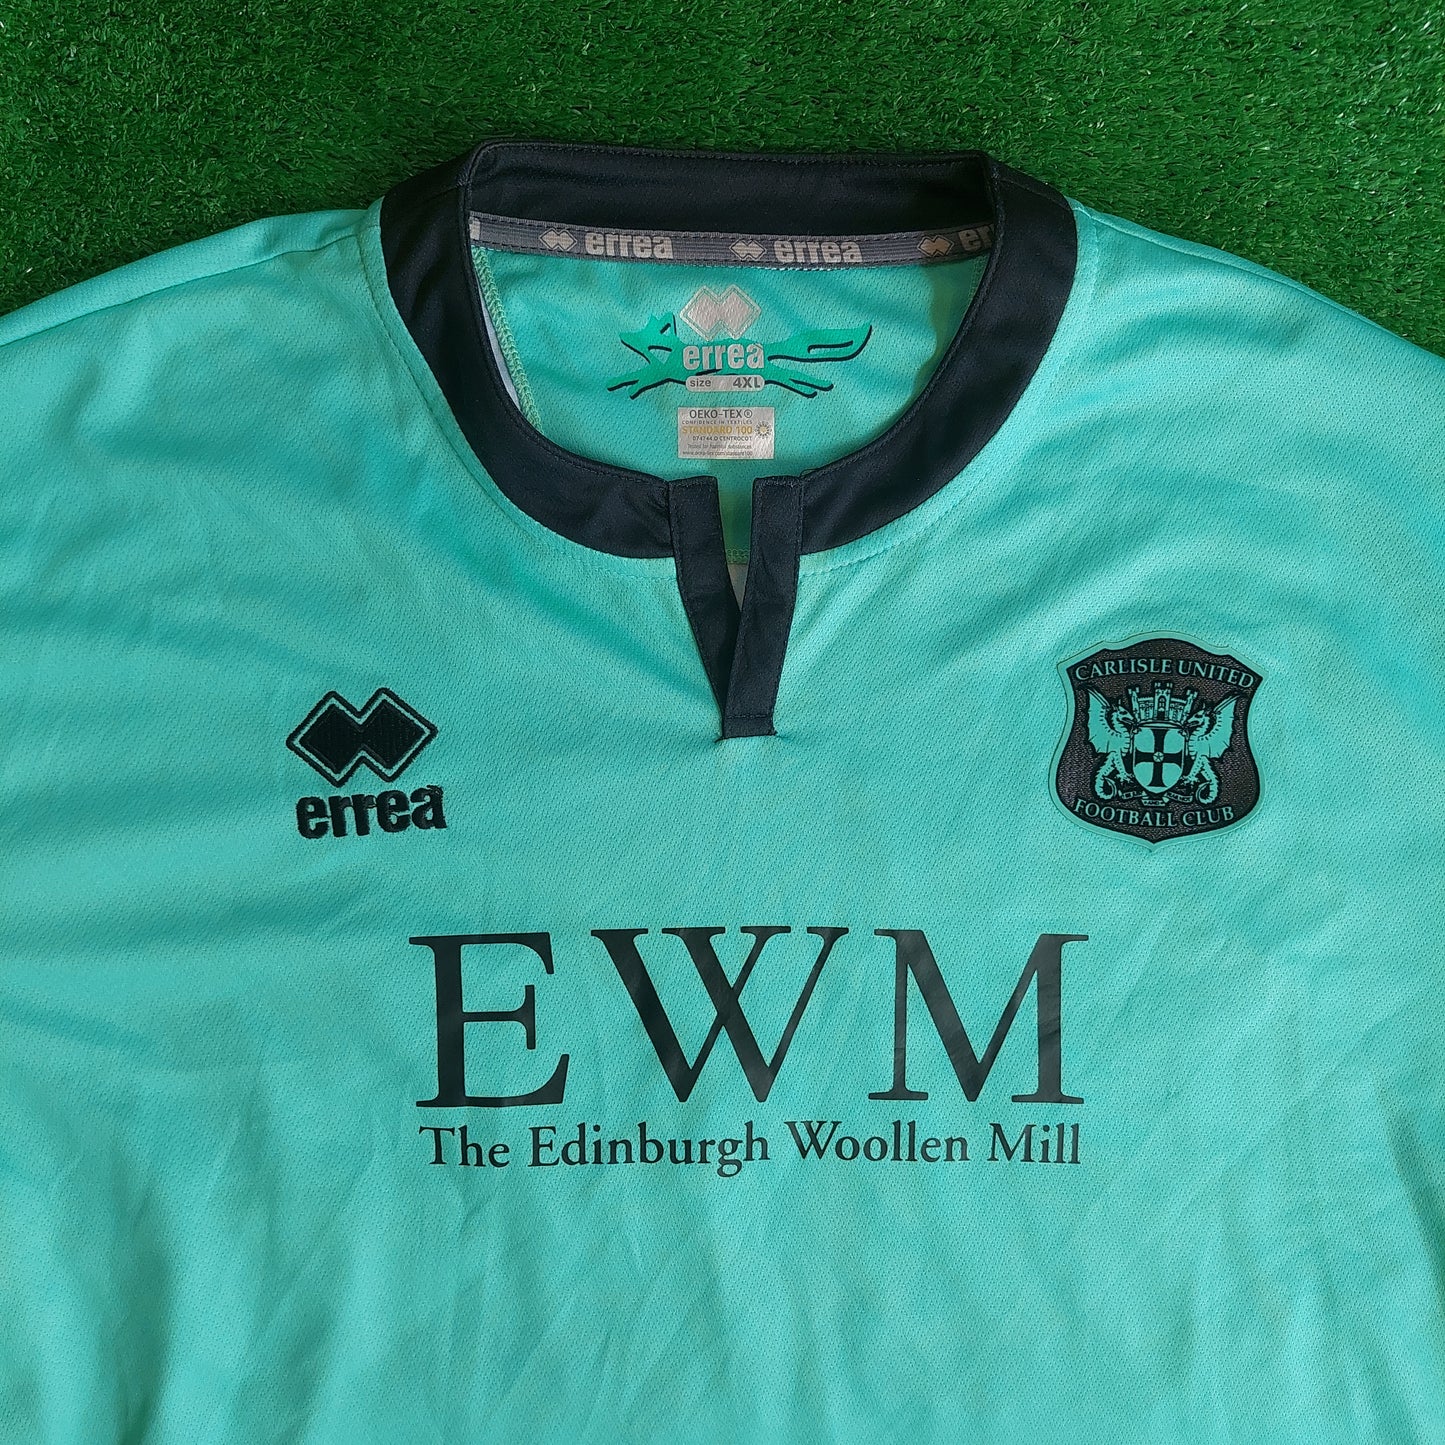 Carlisle United 2019/20 Away Shirt (Very Good) - Size 4XL